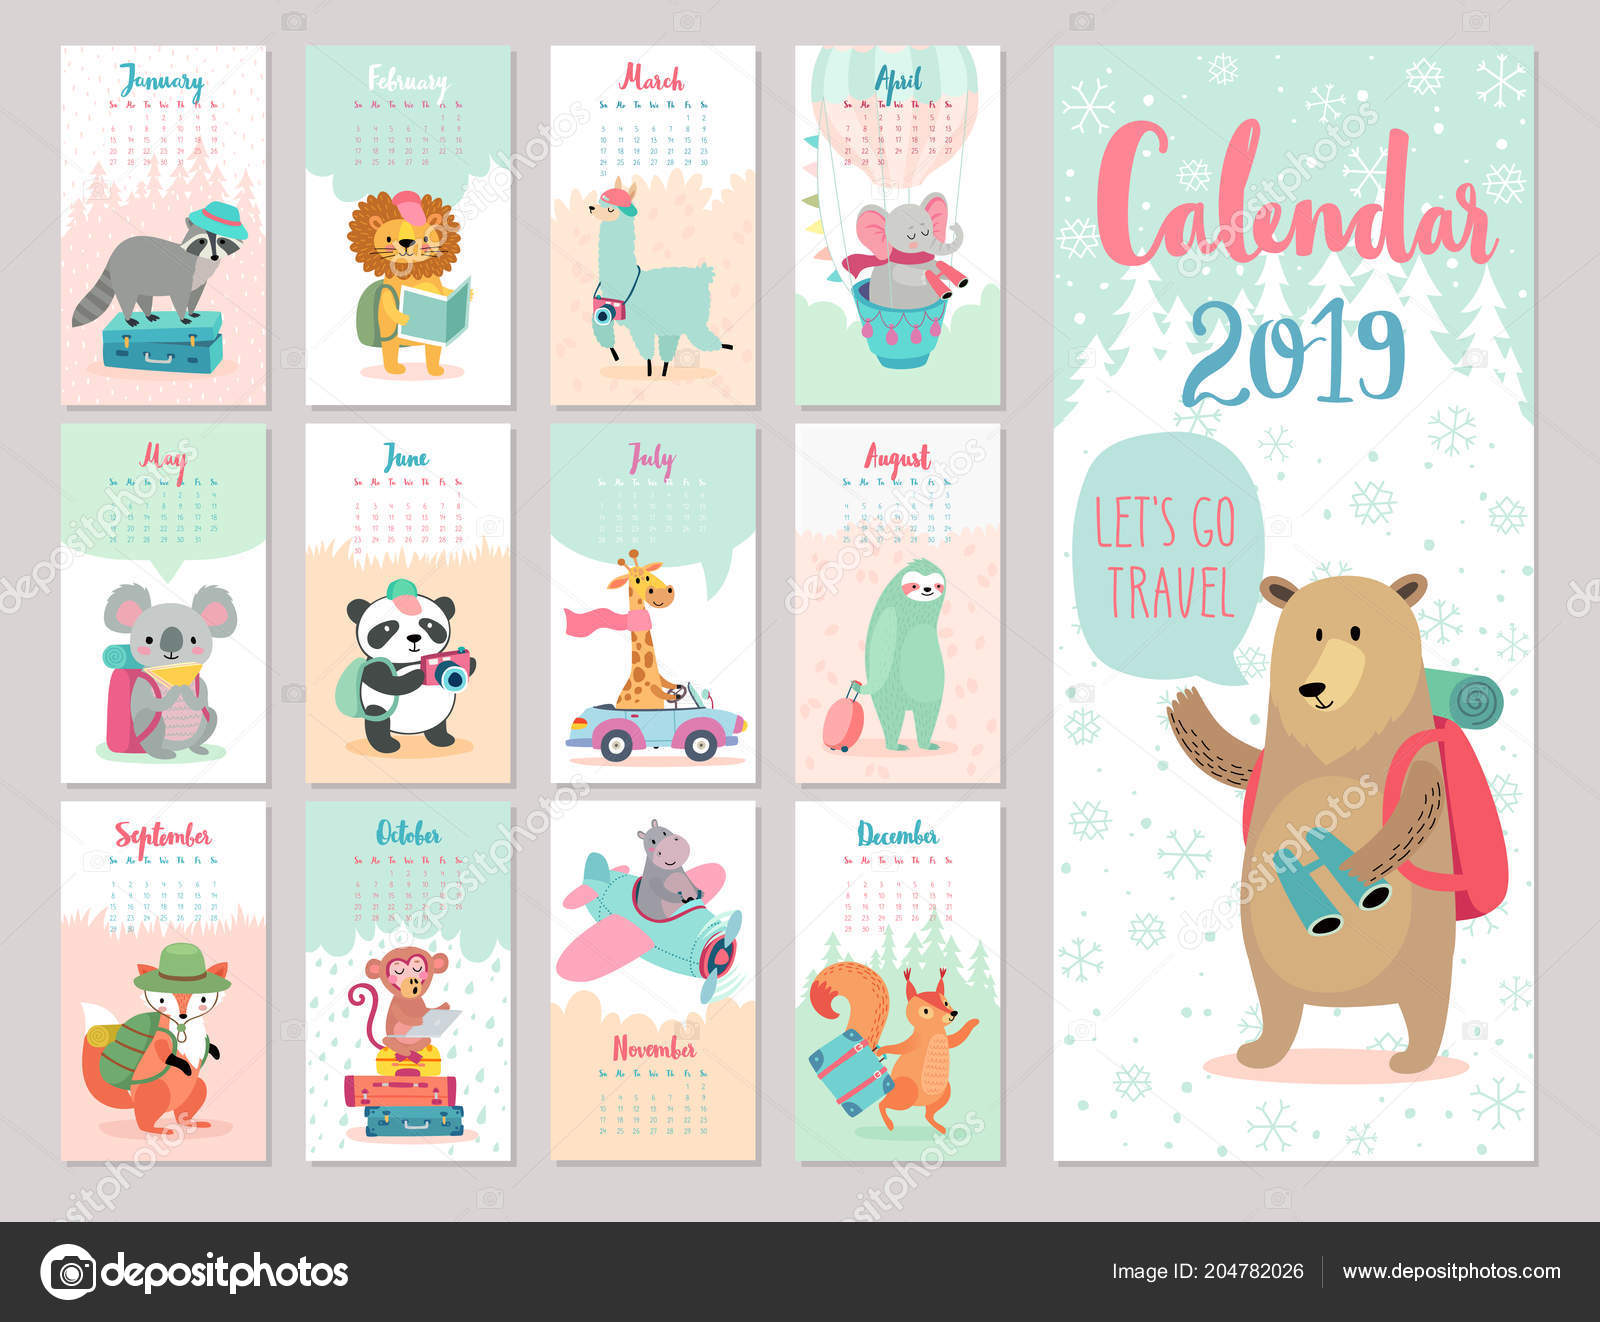 calendar-2019-cute-monthly-calendar-forest-animals-hand-drawn-style